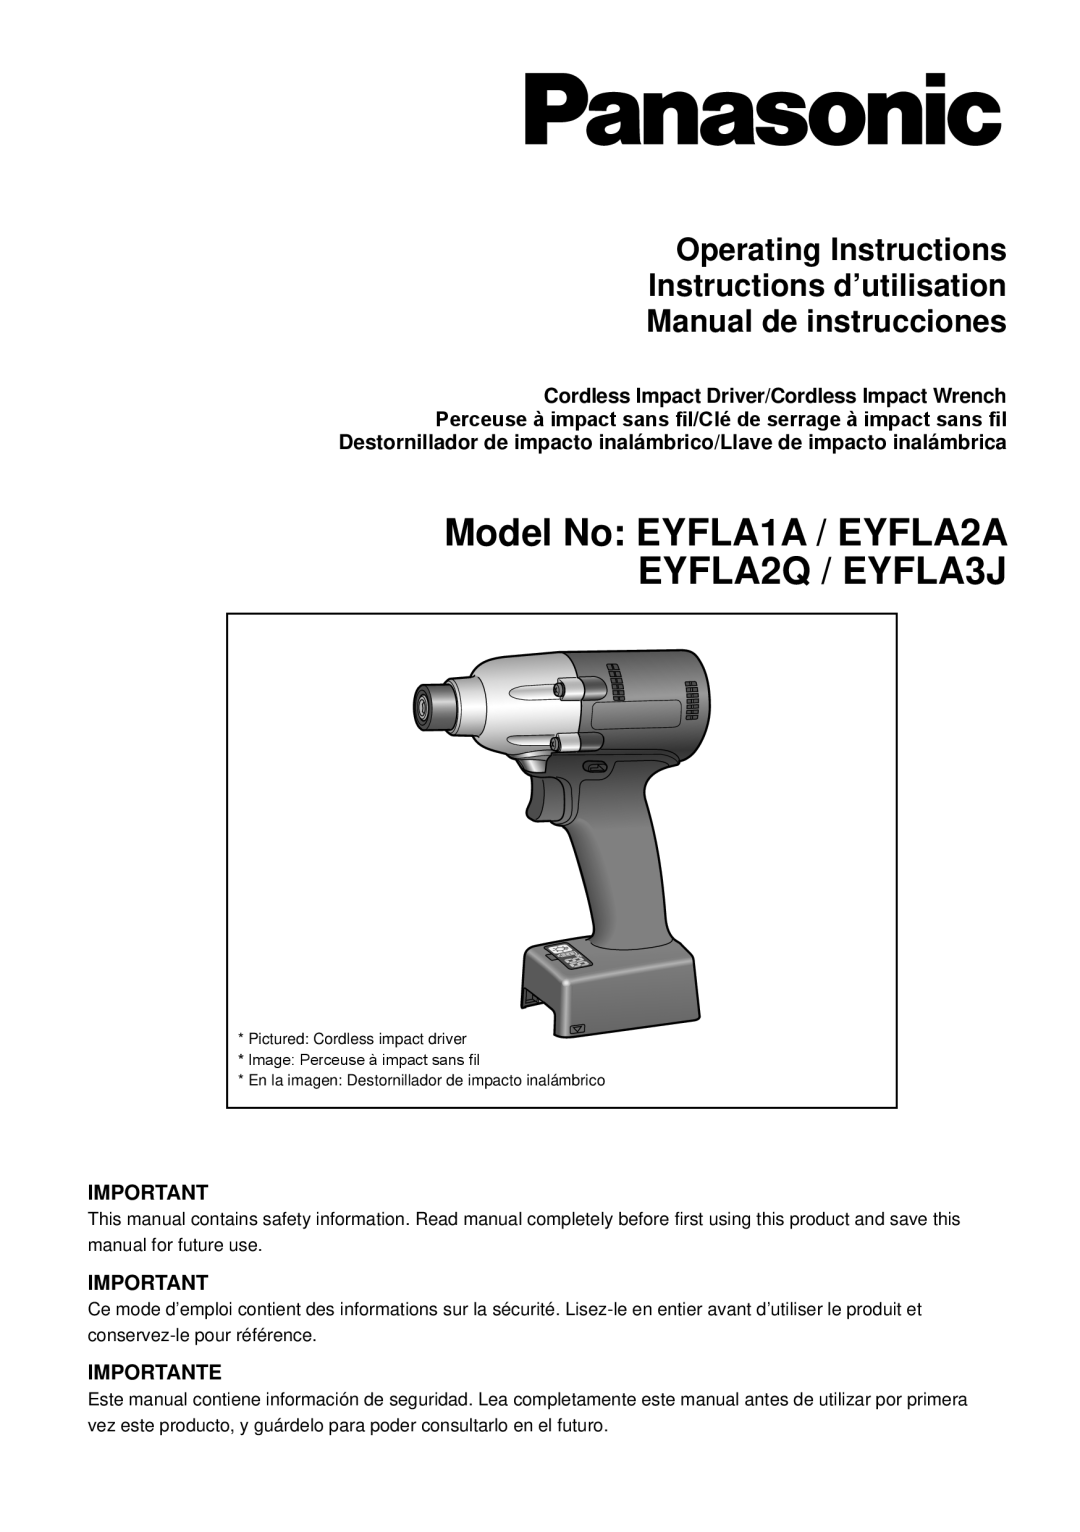 Panasonic operating instructions Model No EYFLA1A / EYFLA2A, EYFLA2Q / EYFLA3J, Manual de instrucciones, Importante 